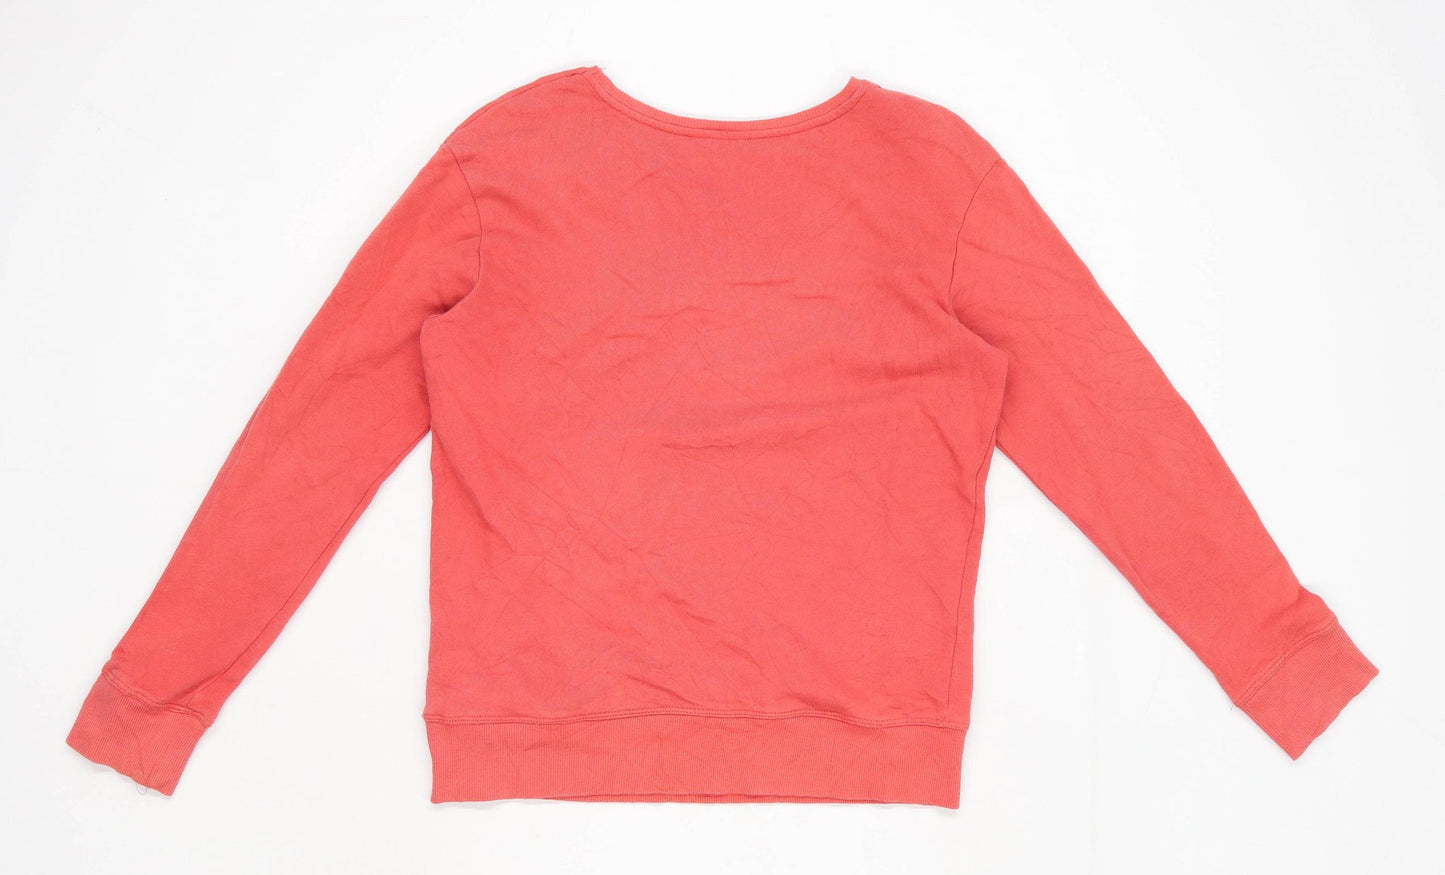 TU Womens Size 10 Textured Cotton Salmon Sweatshirt (Regular)